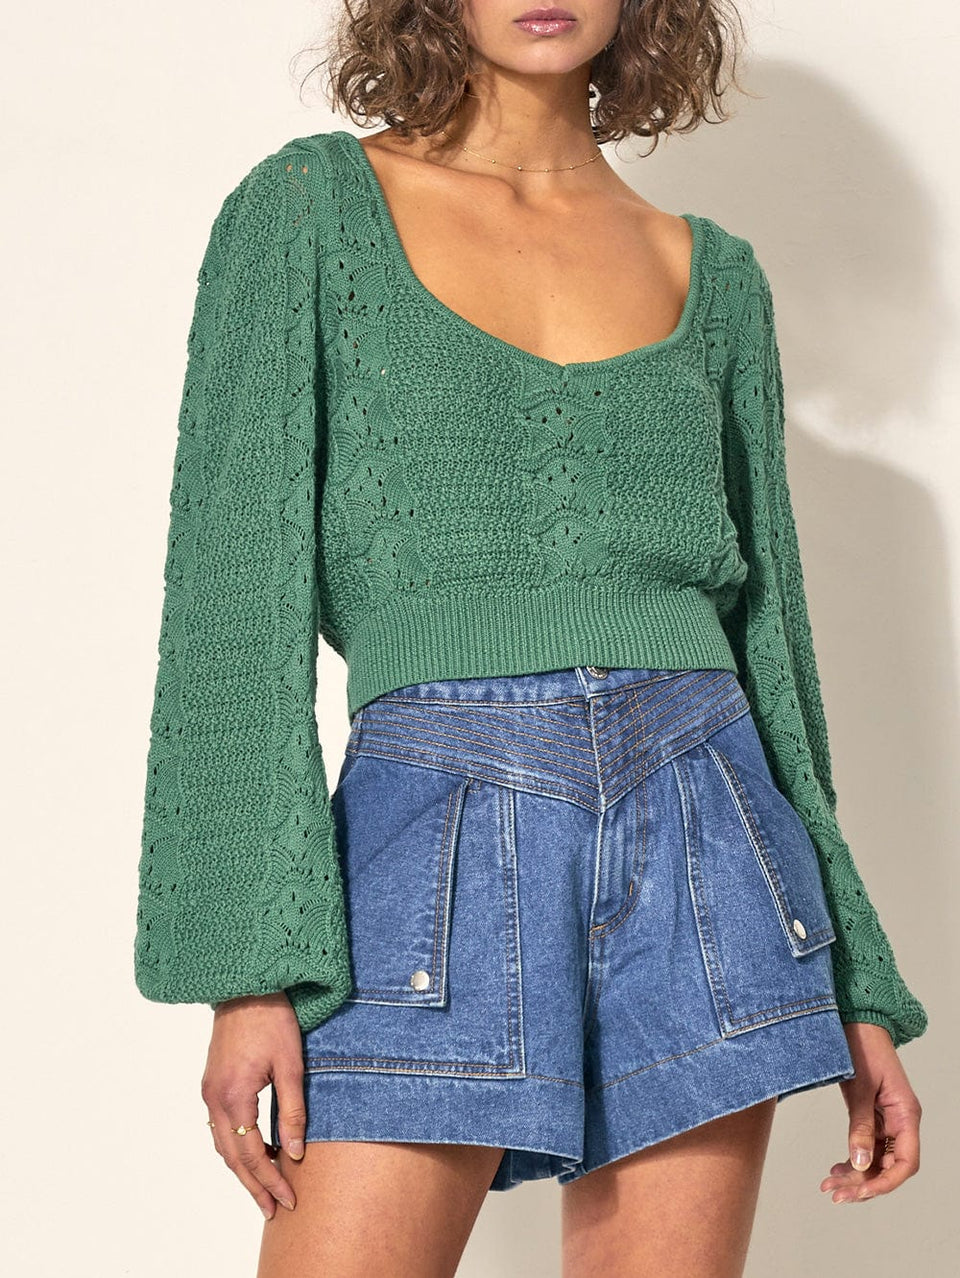 Helena Knit Top - Emerald